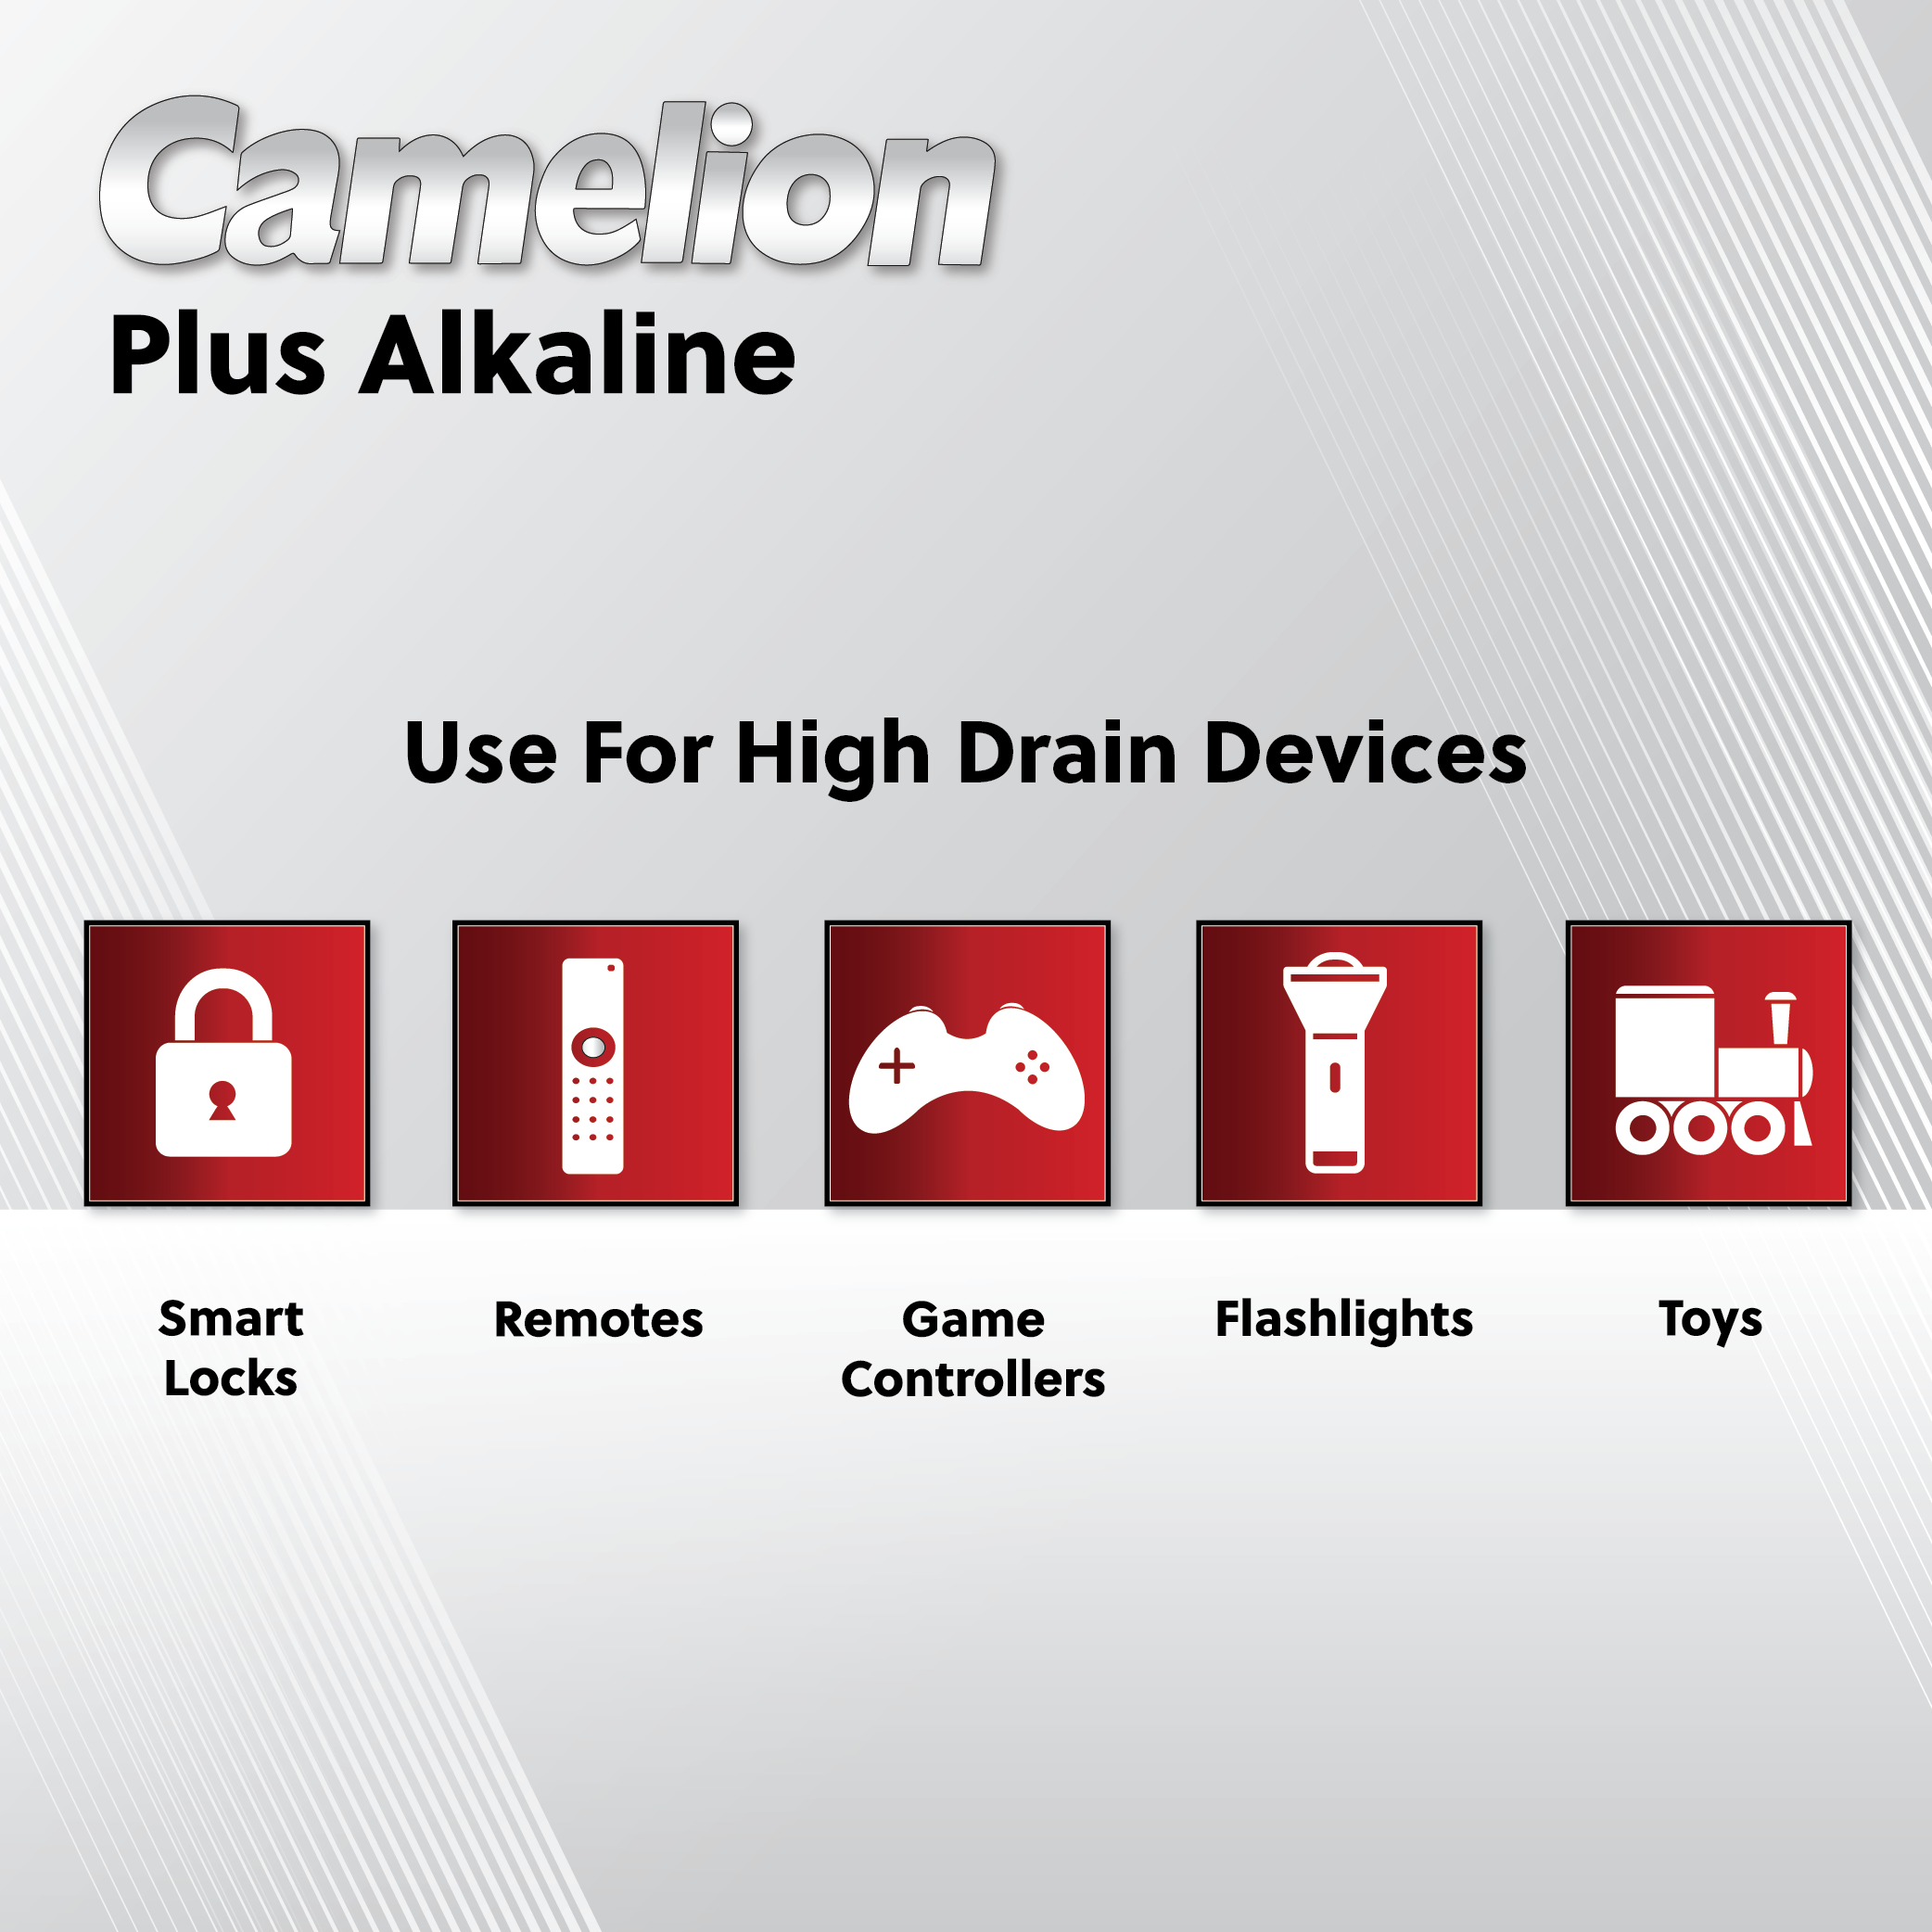 Camelion D Alkaline Plus Plastic Tub of 4